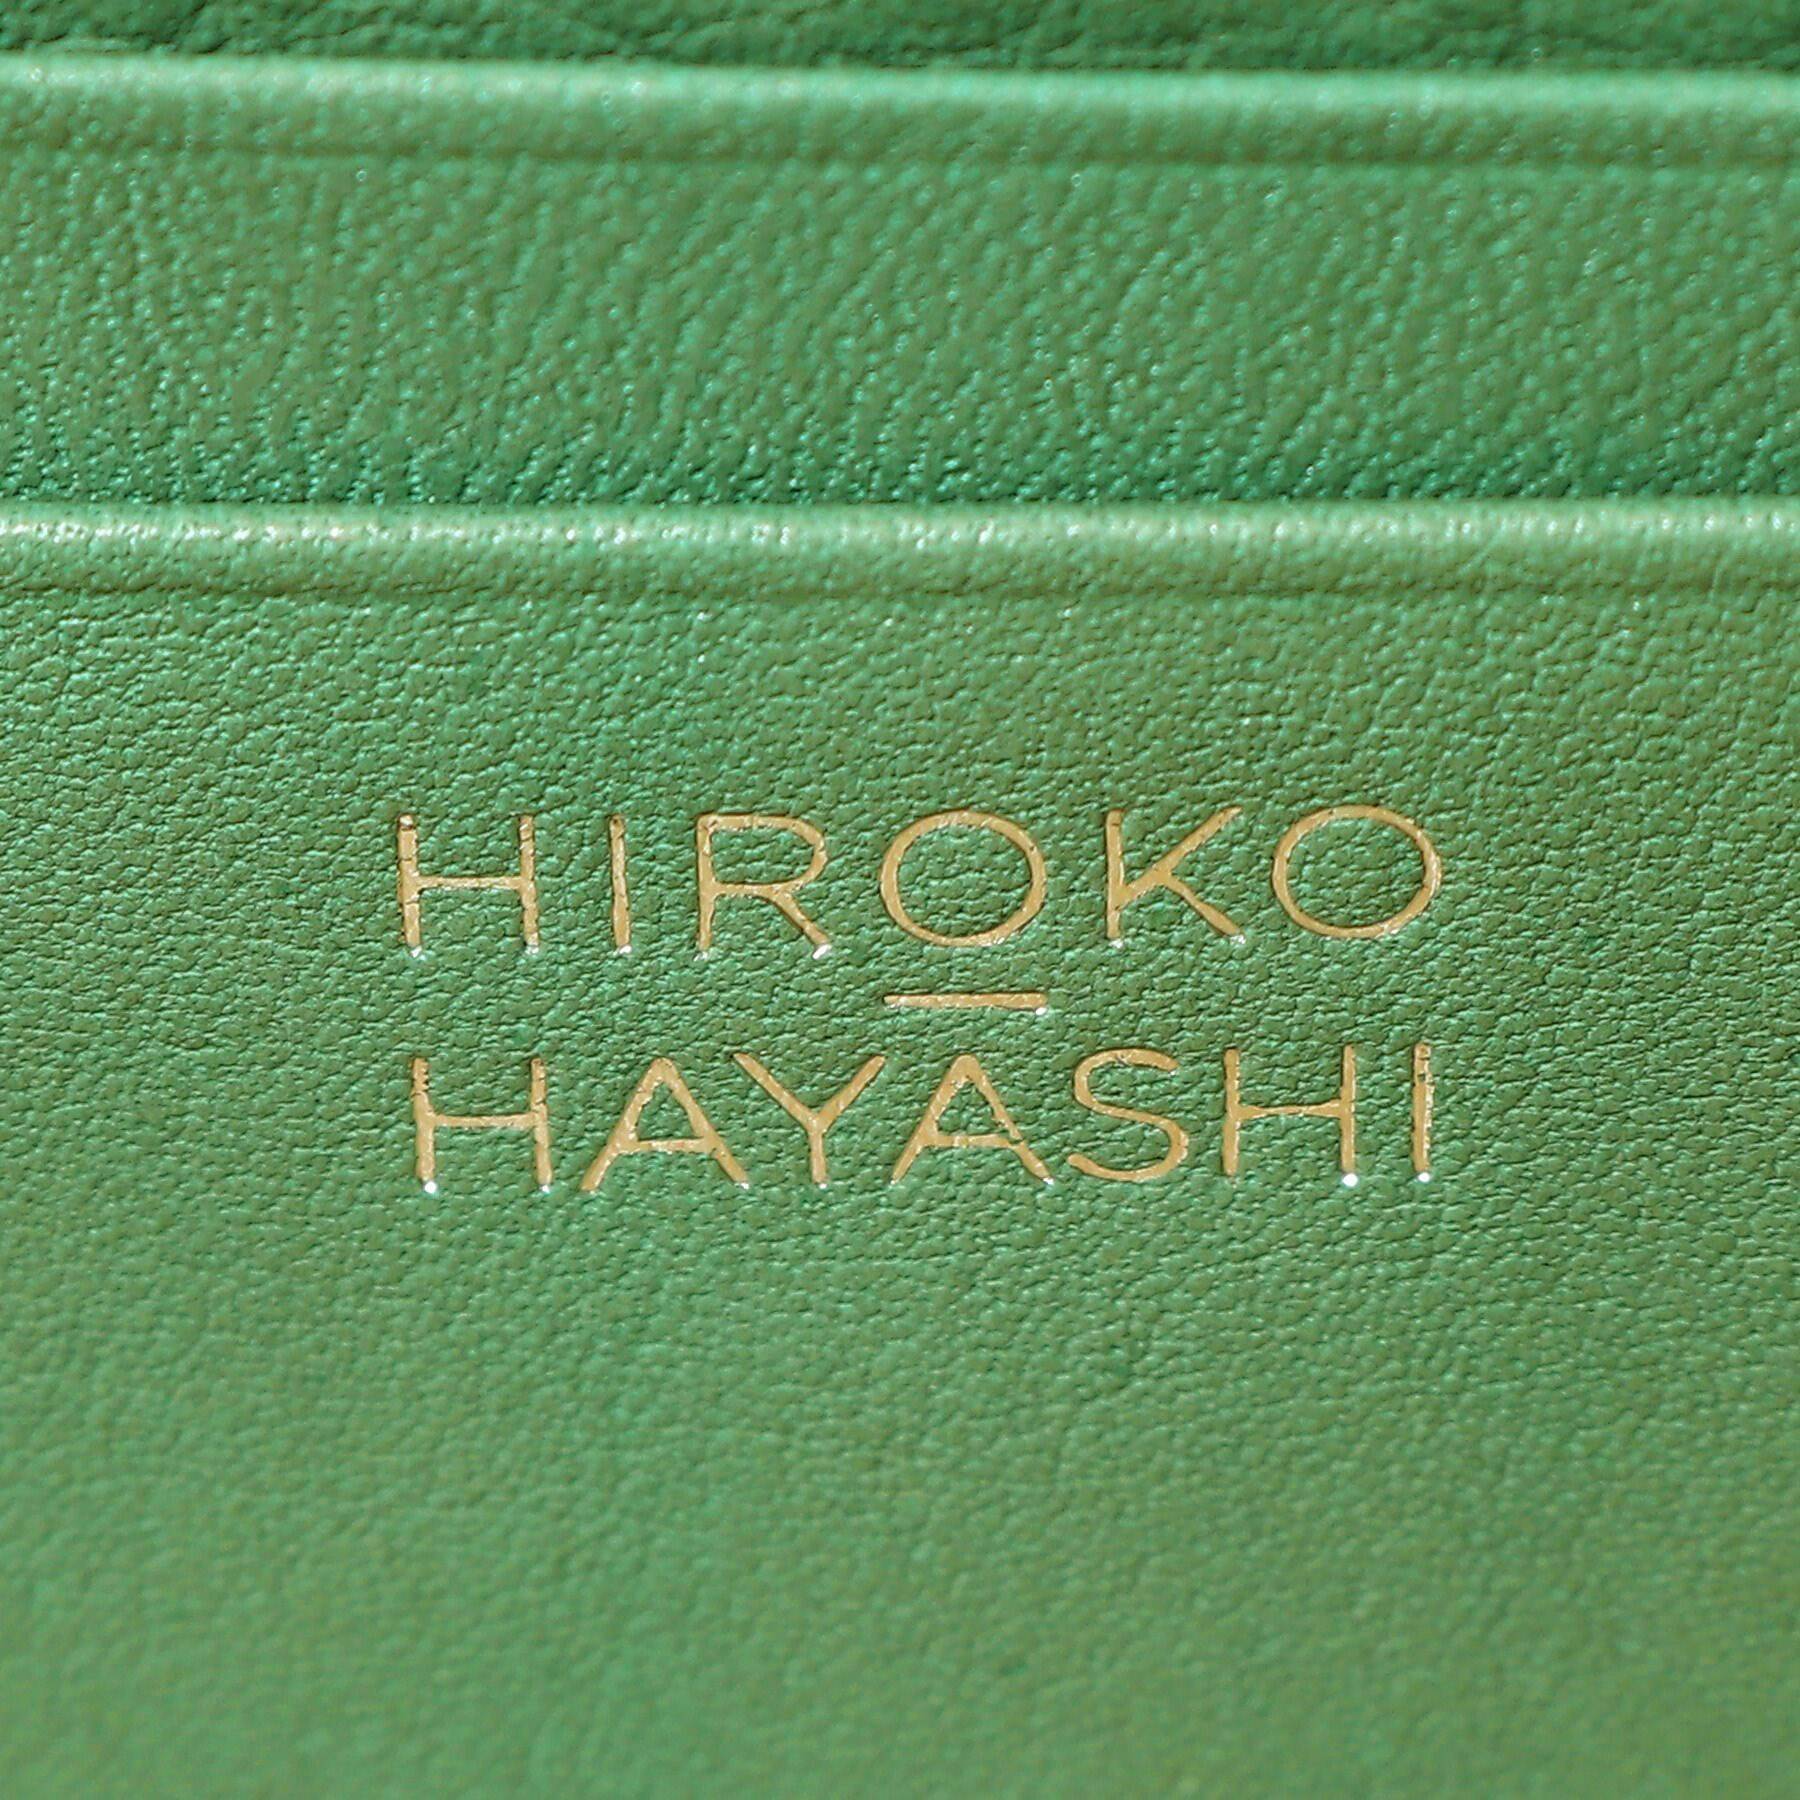 WEB・渋谷店限定】CAFE-3(カフェ) 長財布|HIROKO HAYASHI(ヒロコ